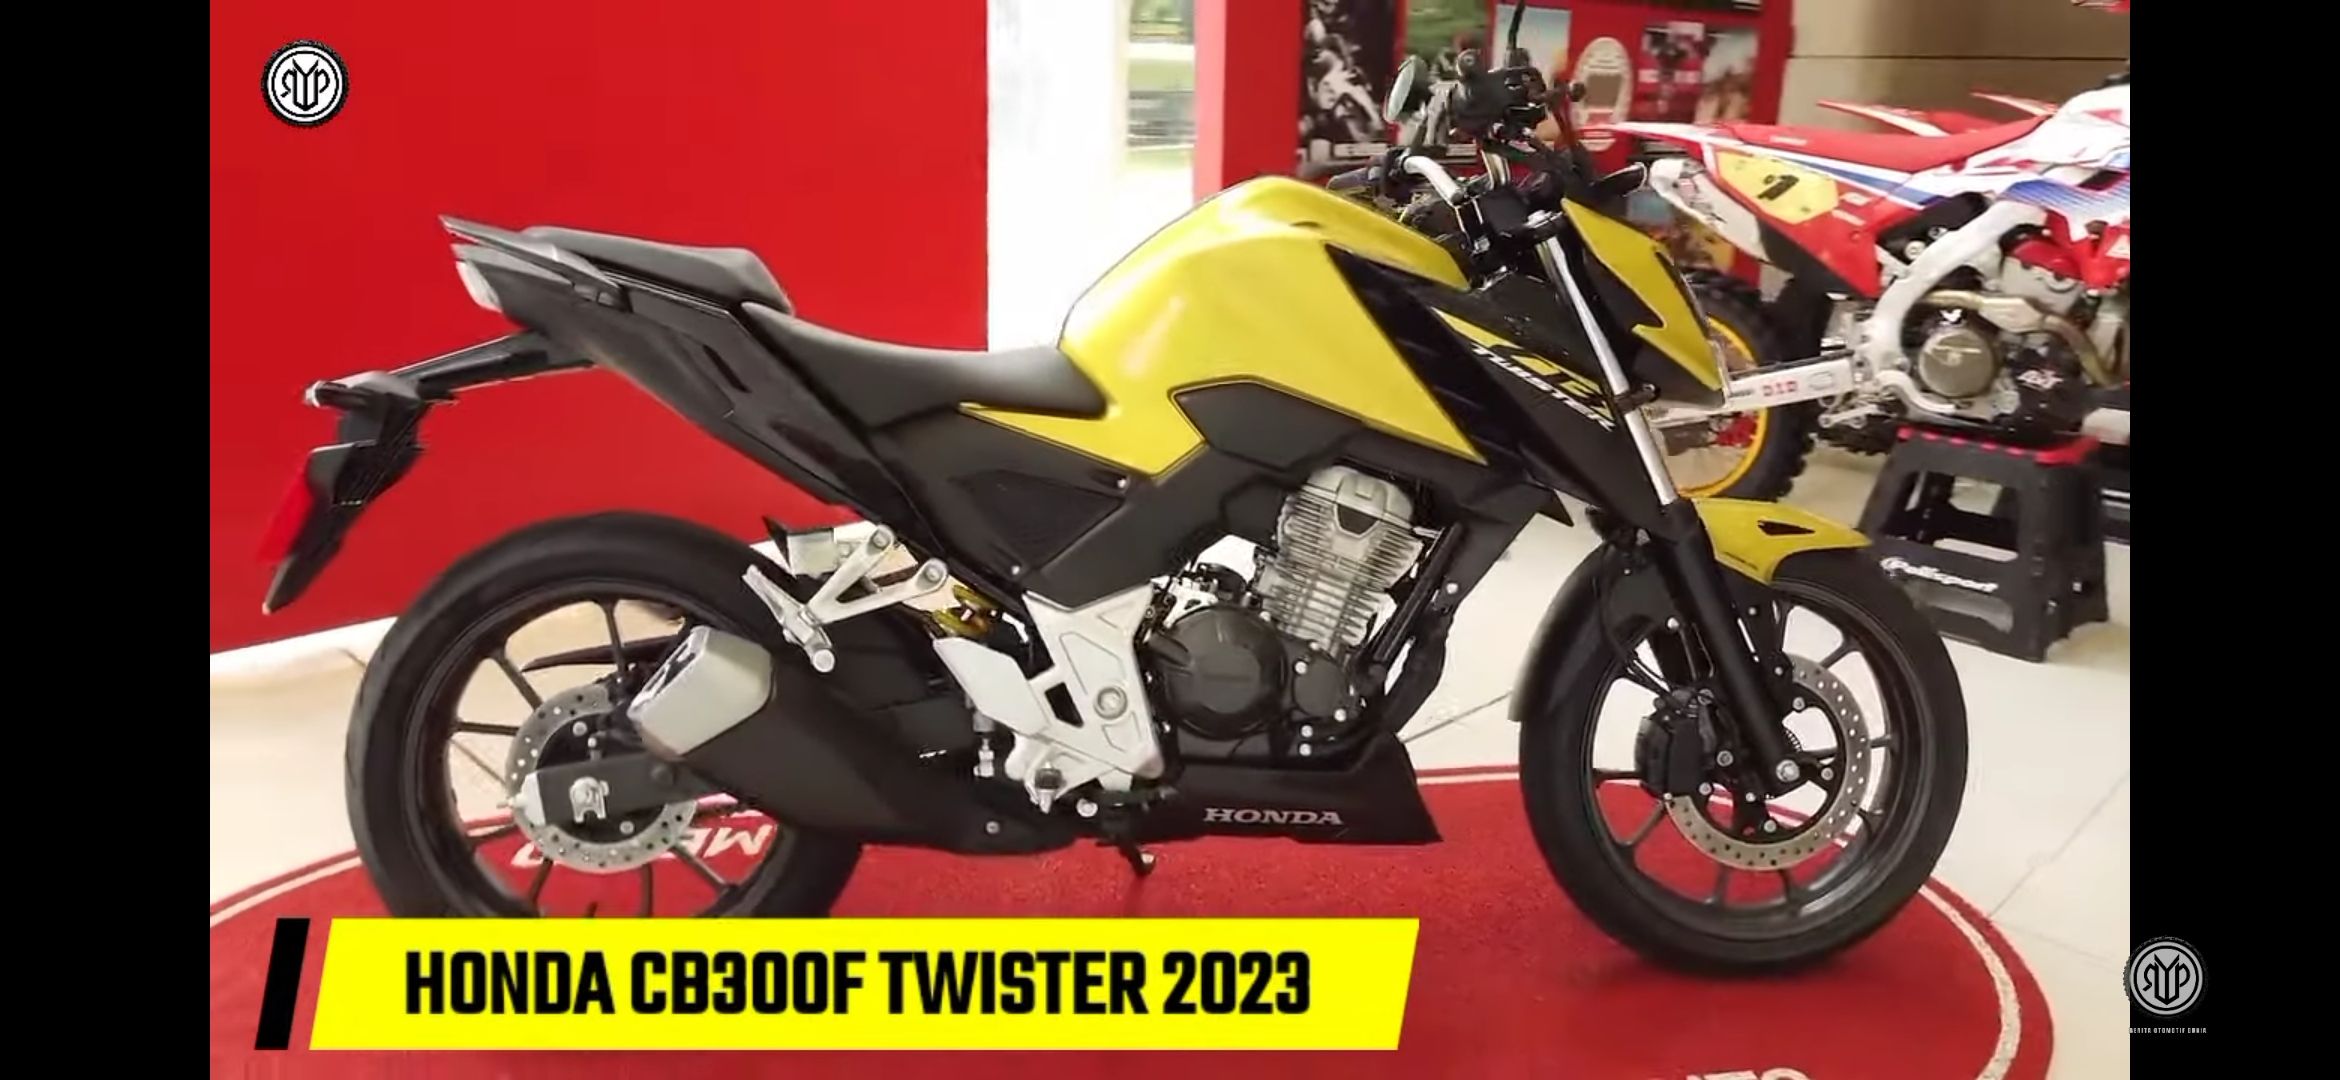 Honda CB300F Twister 2023.